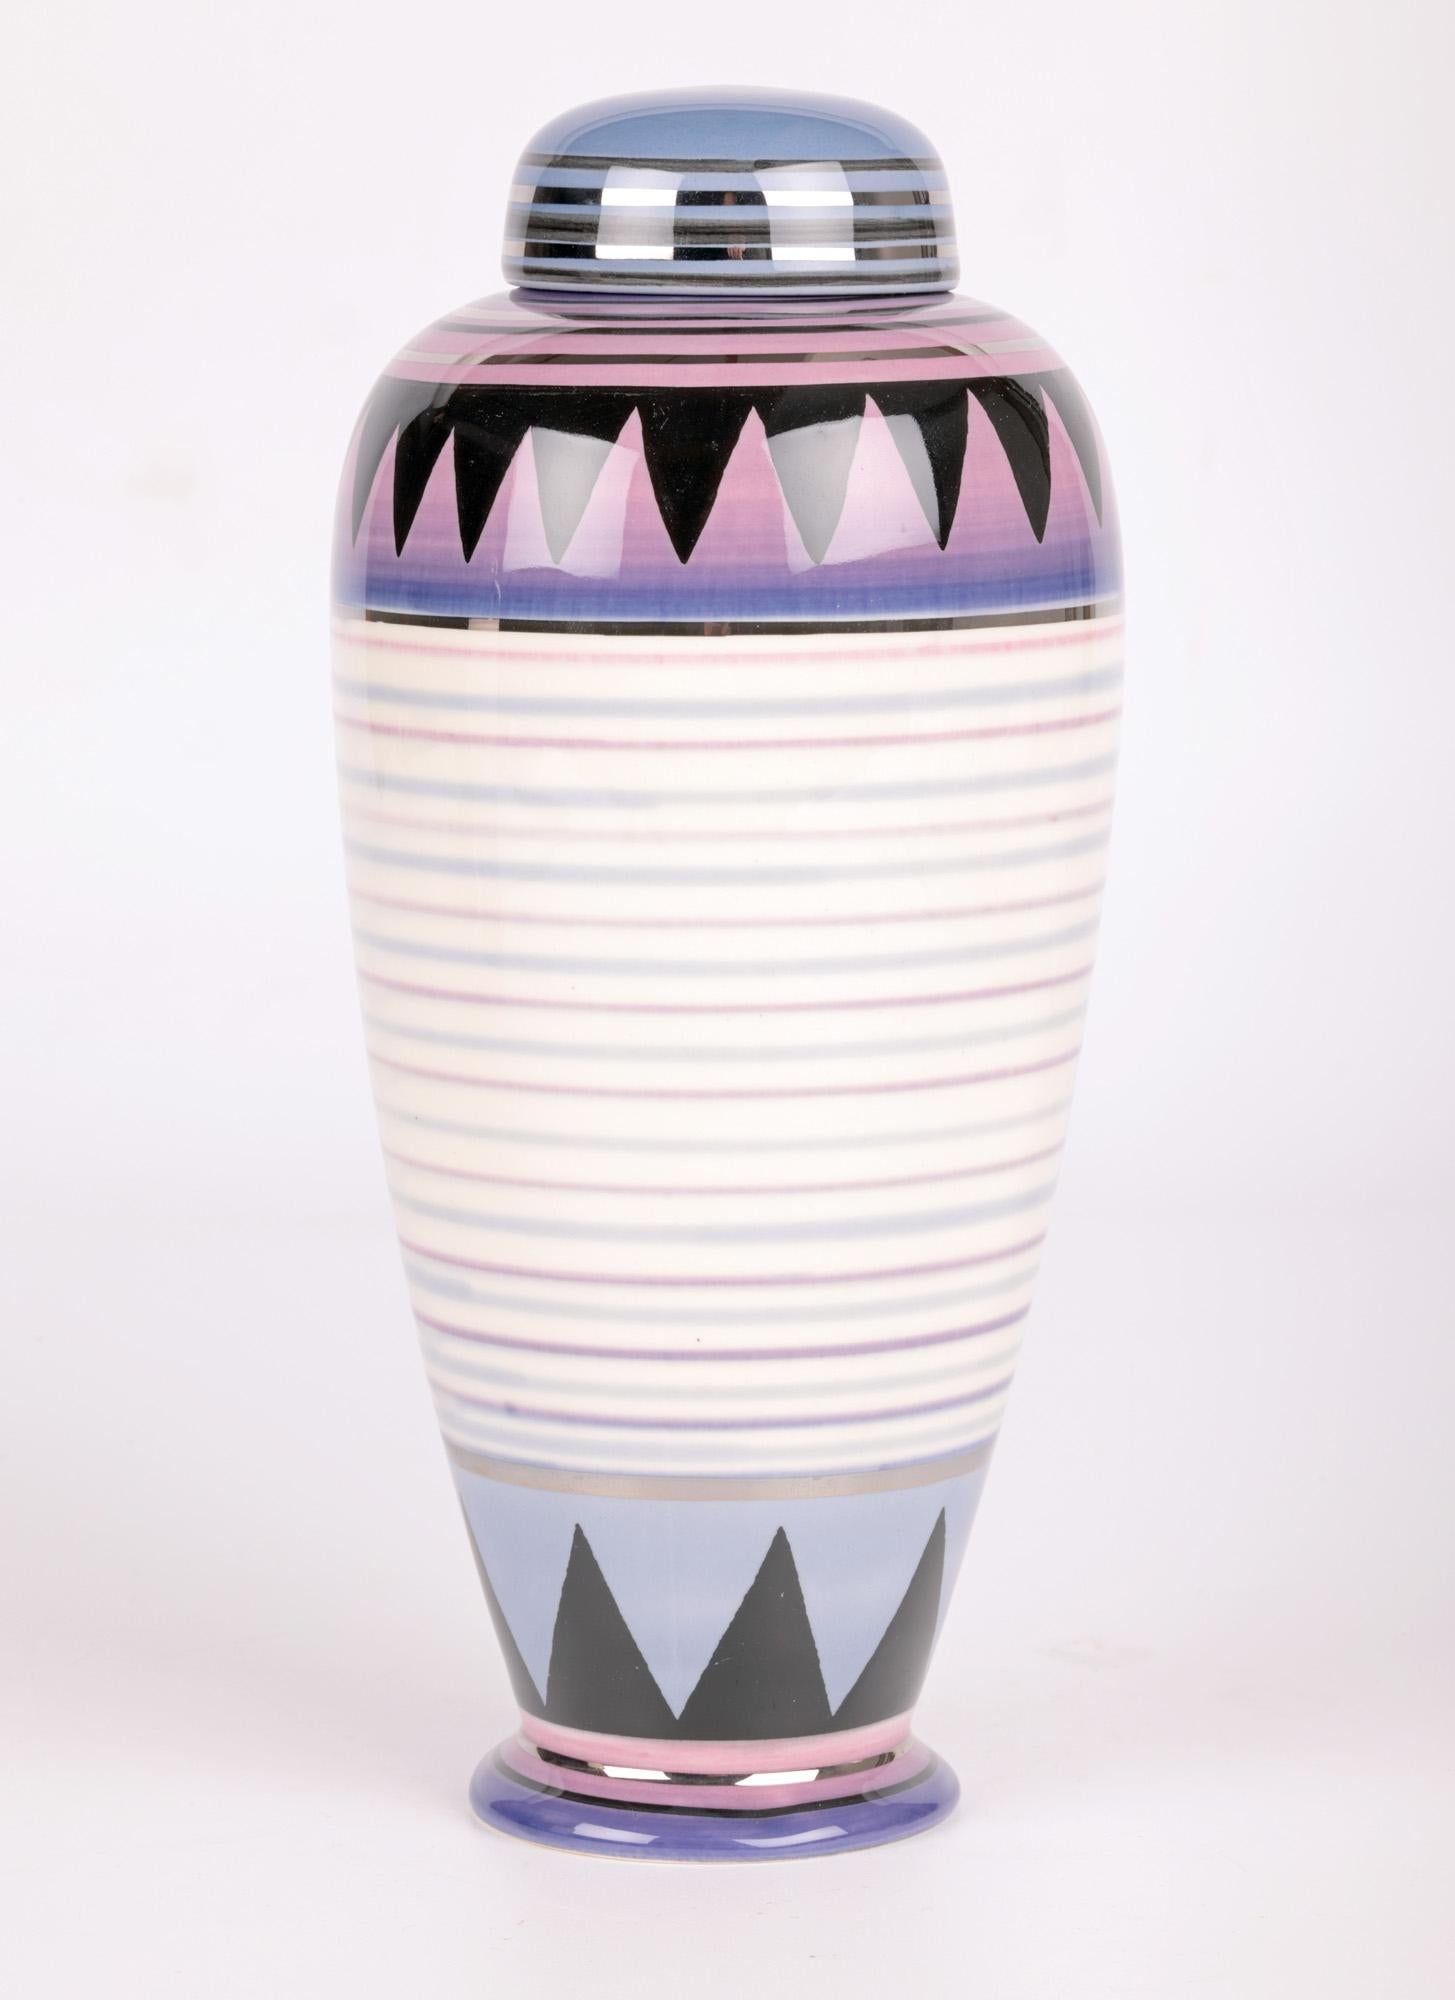 Moorland Pottery Paar keramische Vasen mit Deckeln   im Angebot 5